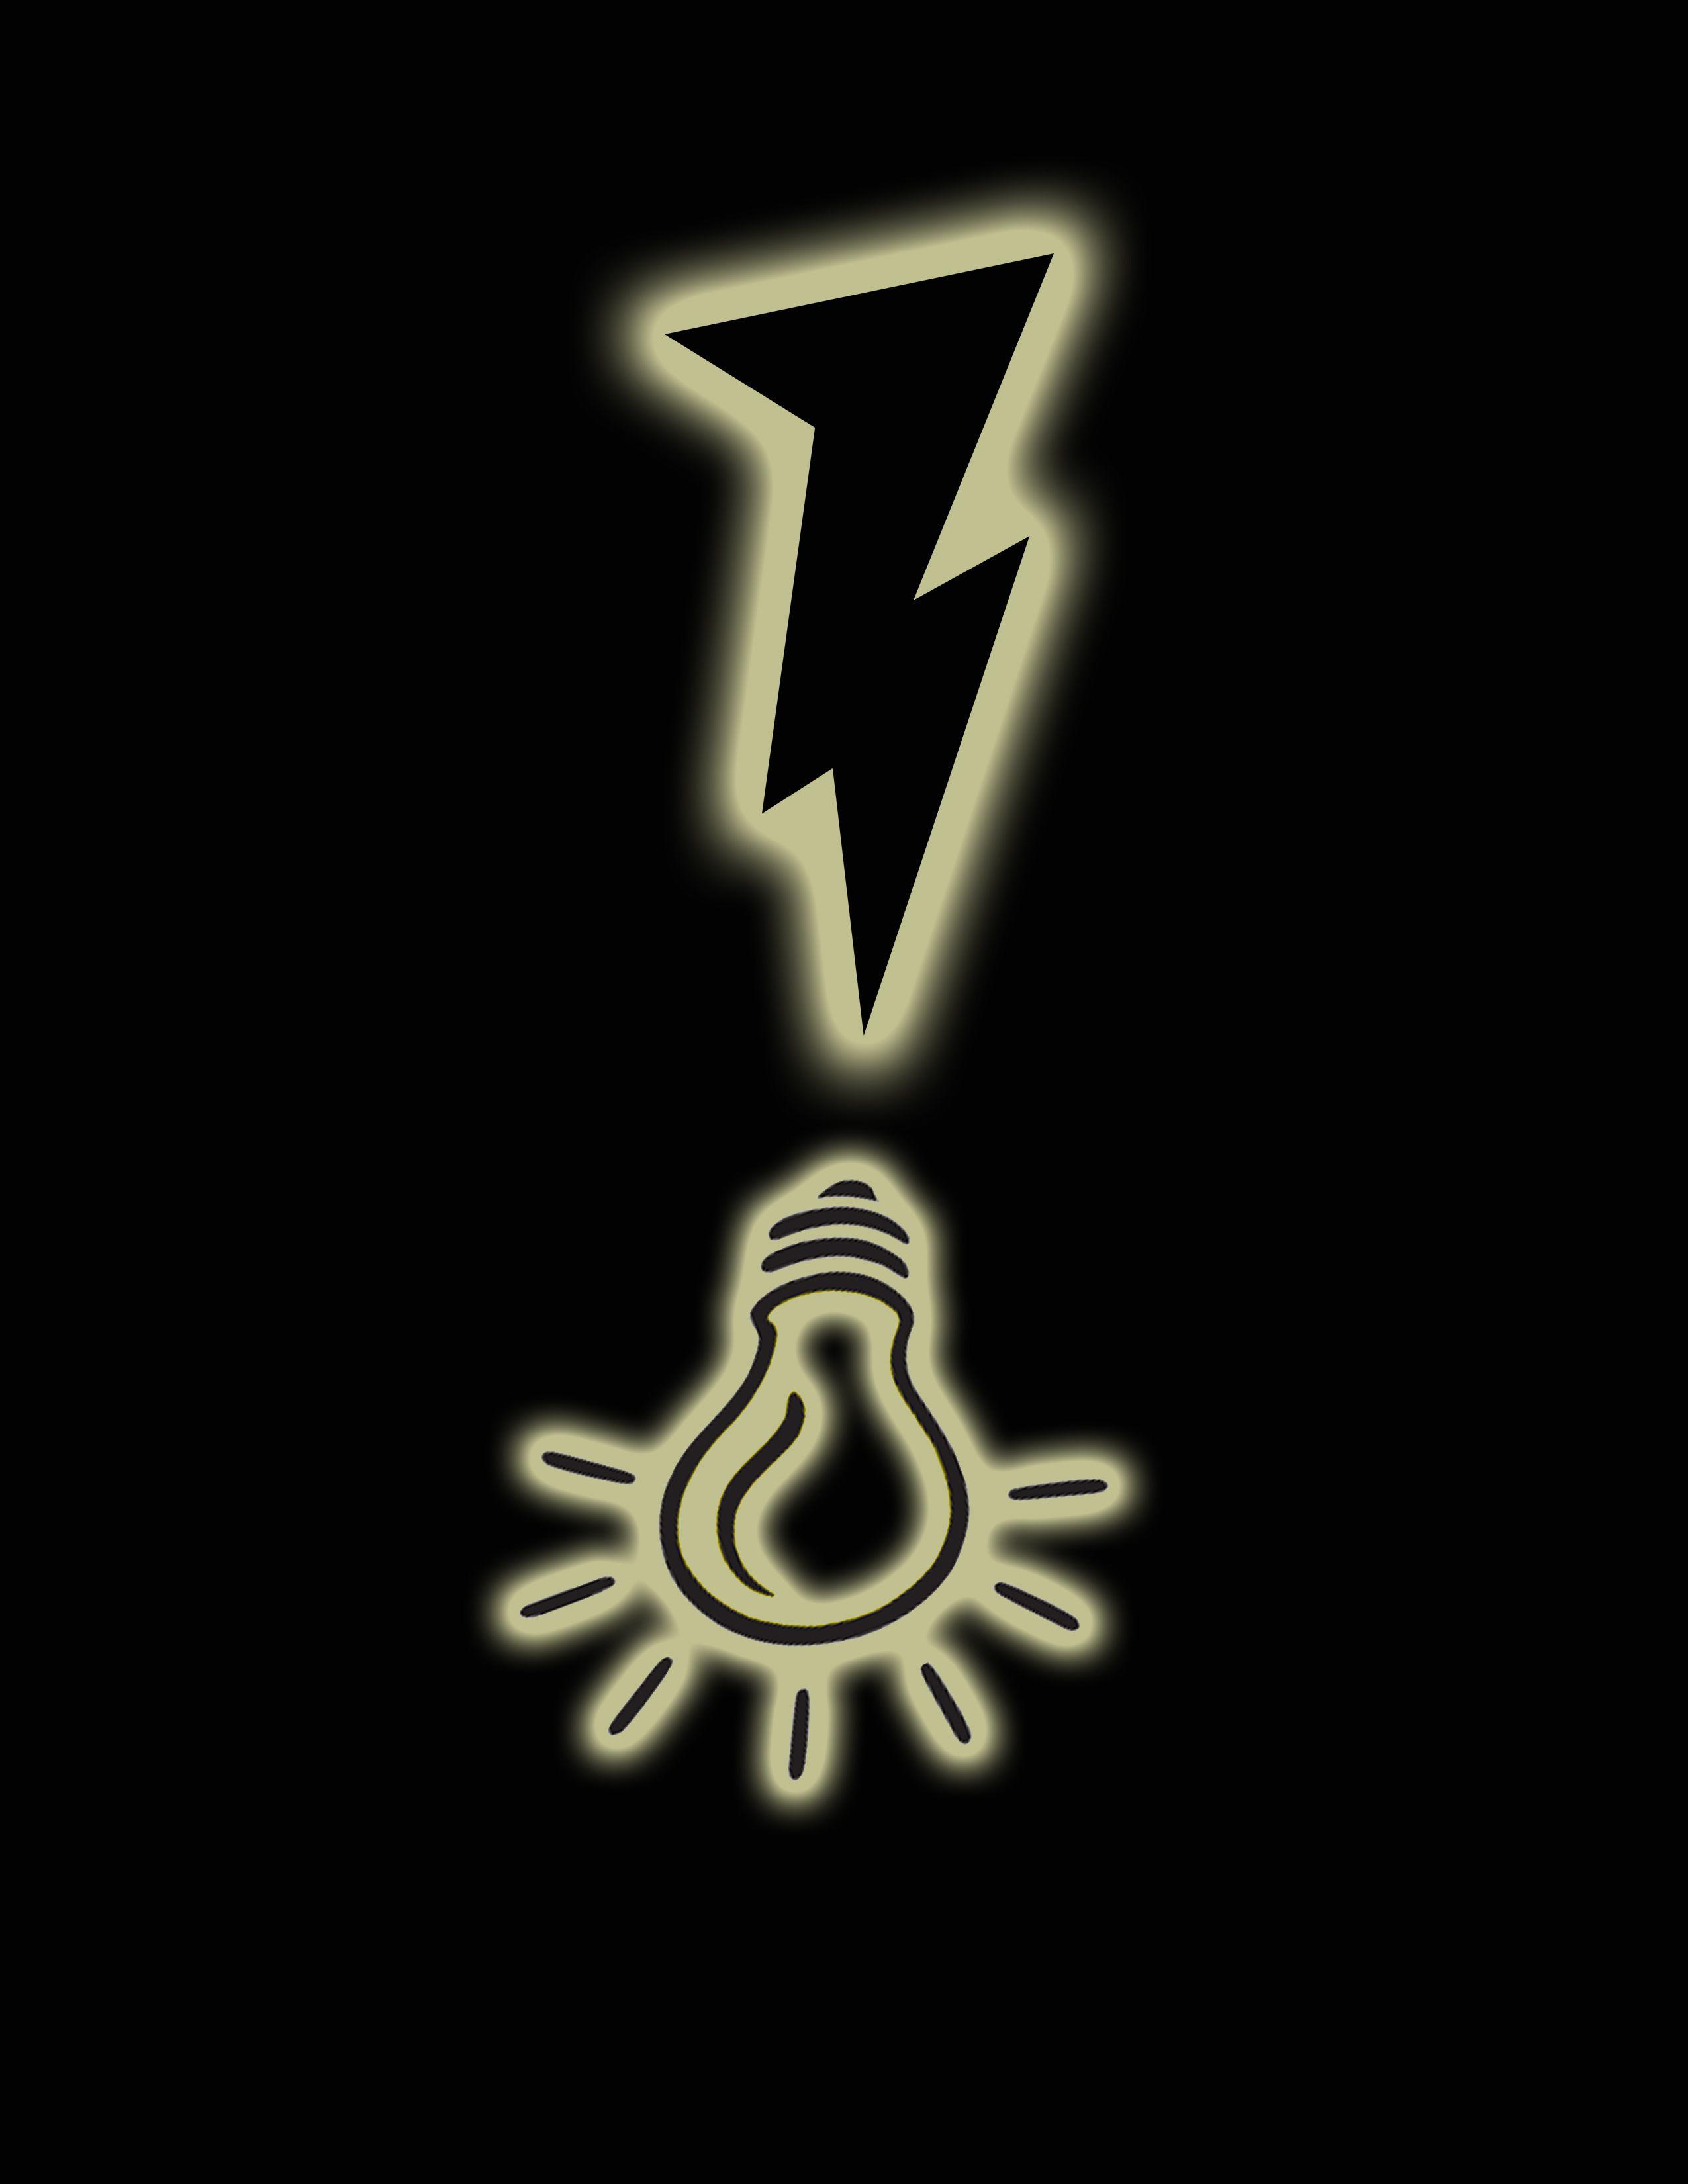 Blackout Logo - I BLACKOUT AGAINST POWER HIKE!